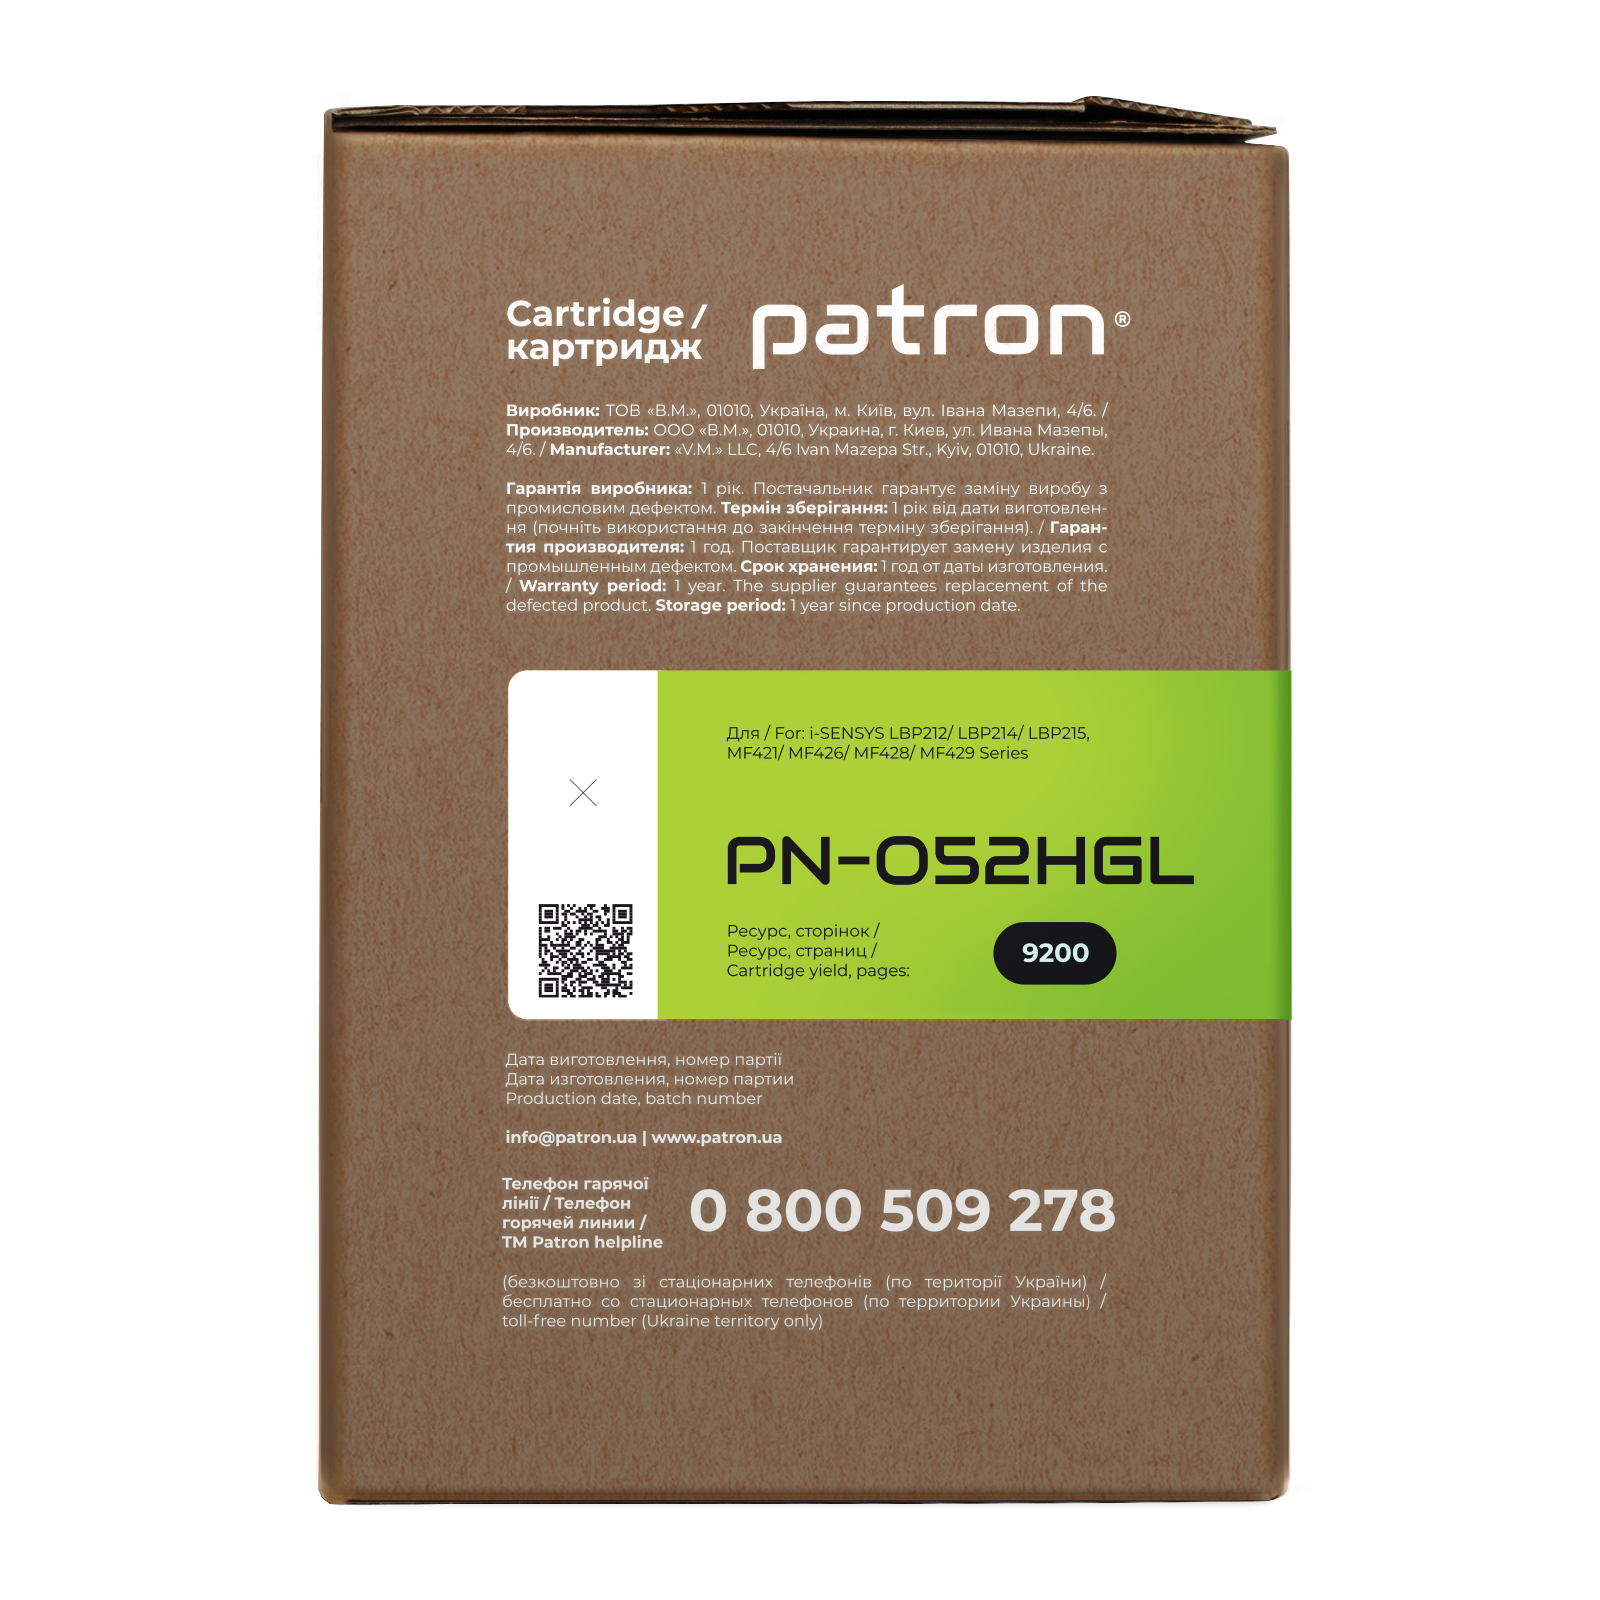 Картридж Patron CANON 052H GREEN Label (PN-052HGL) изображение 3